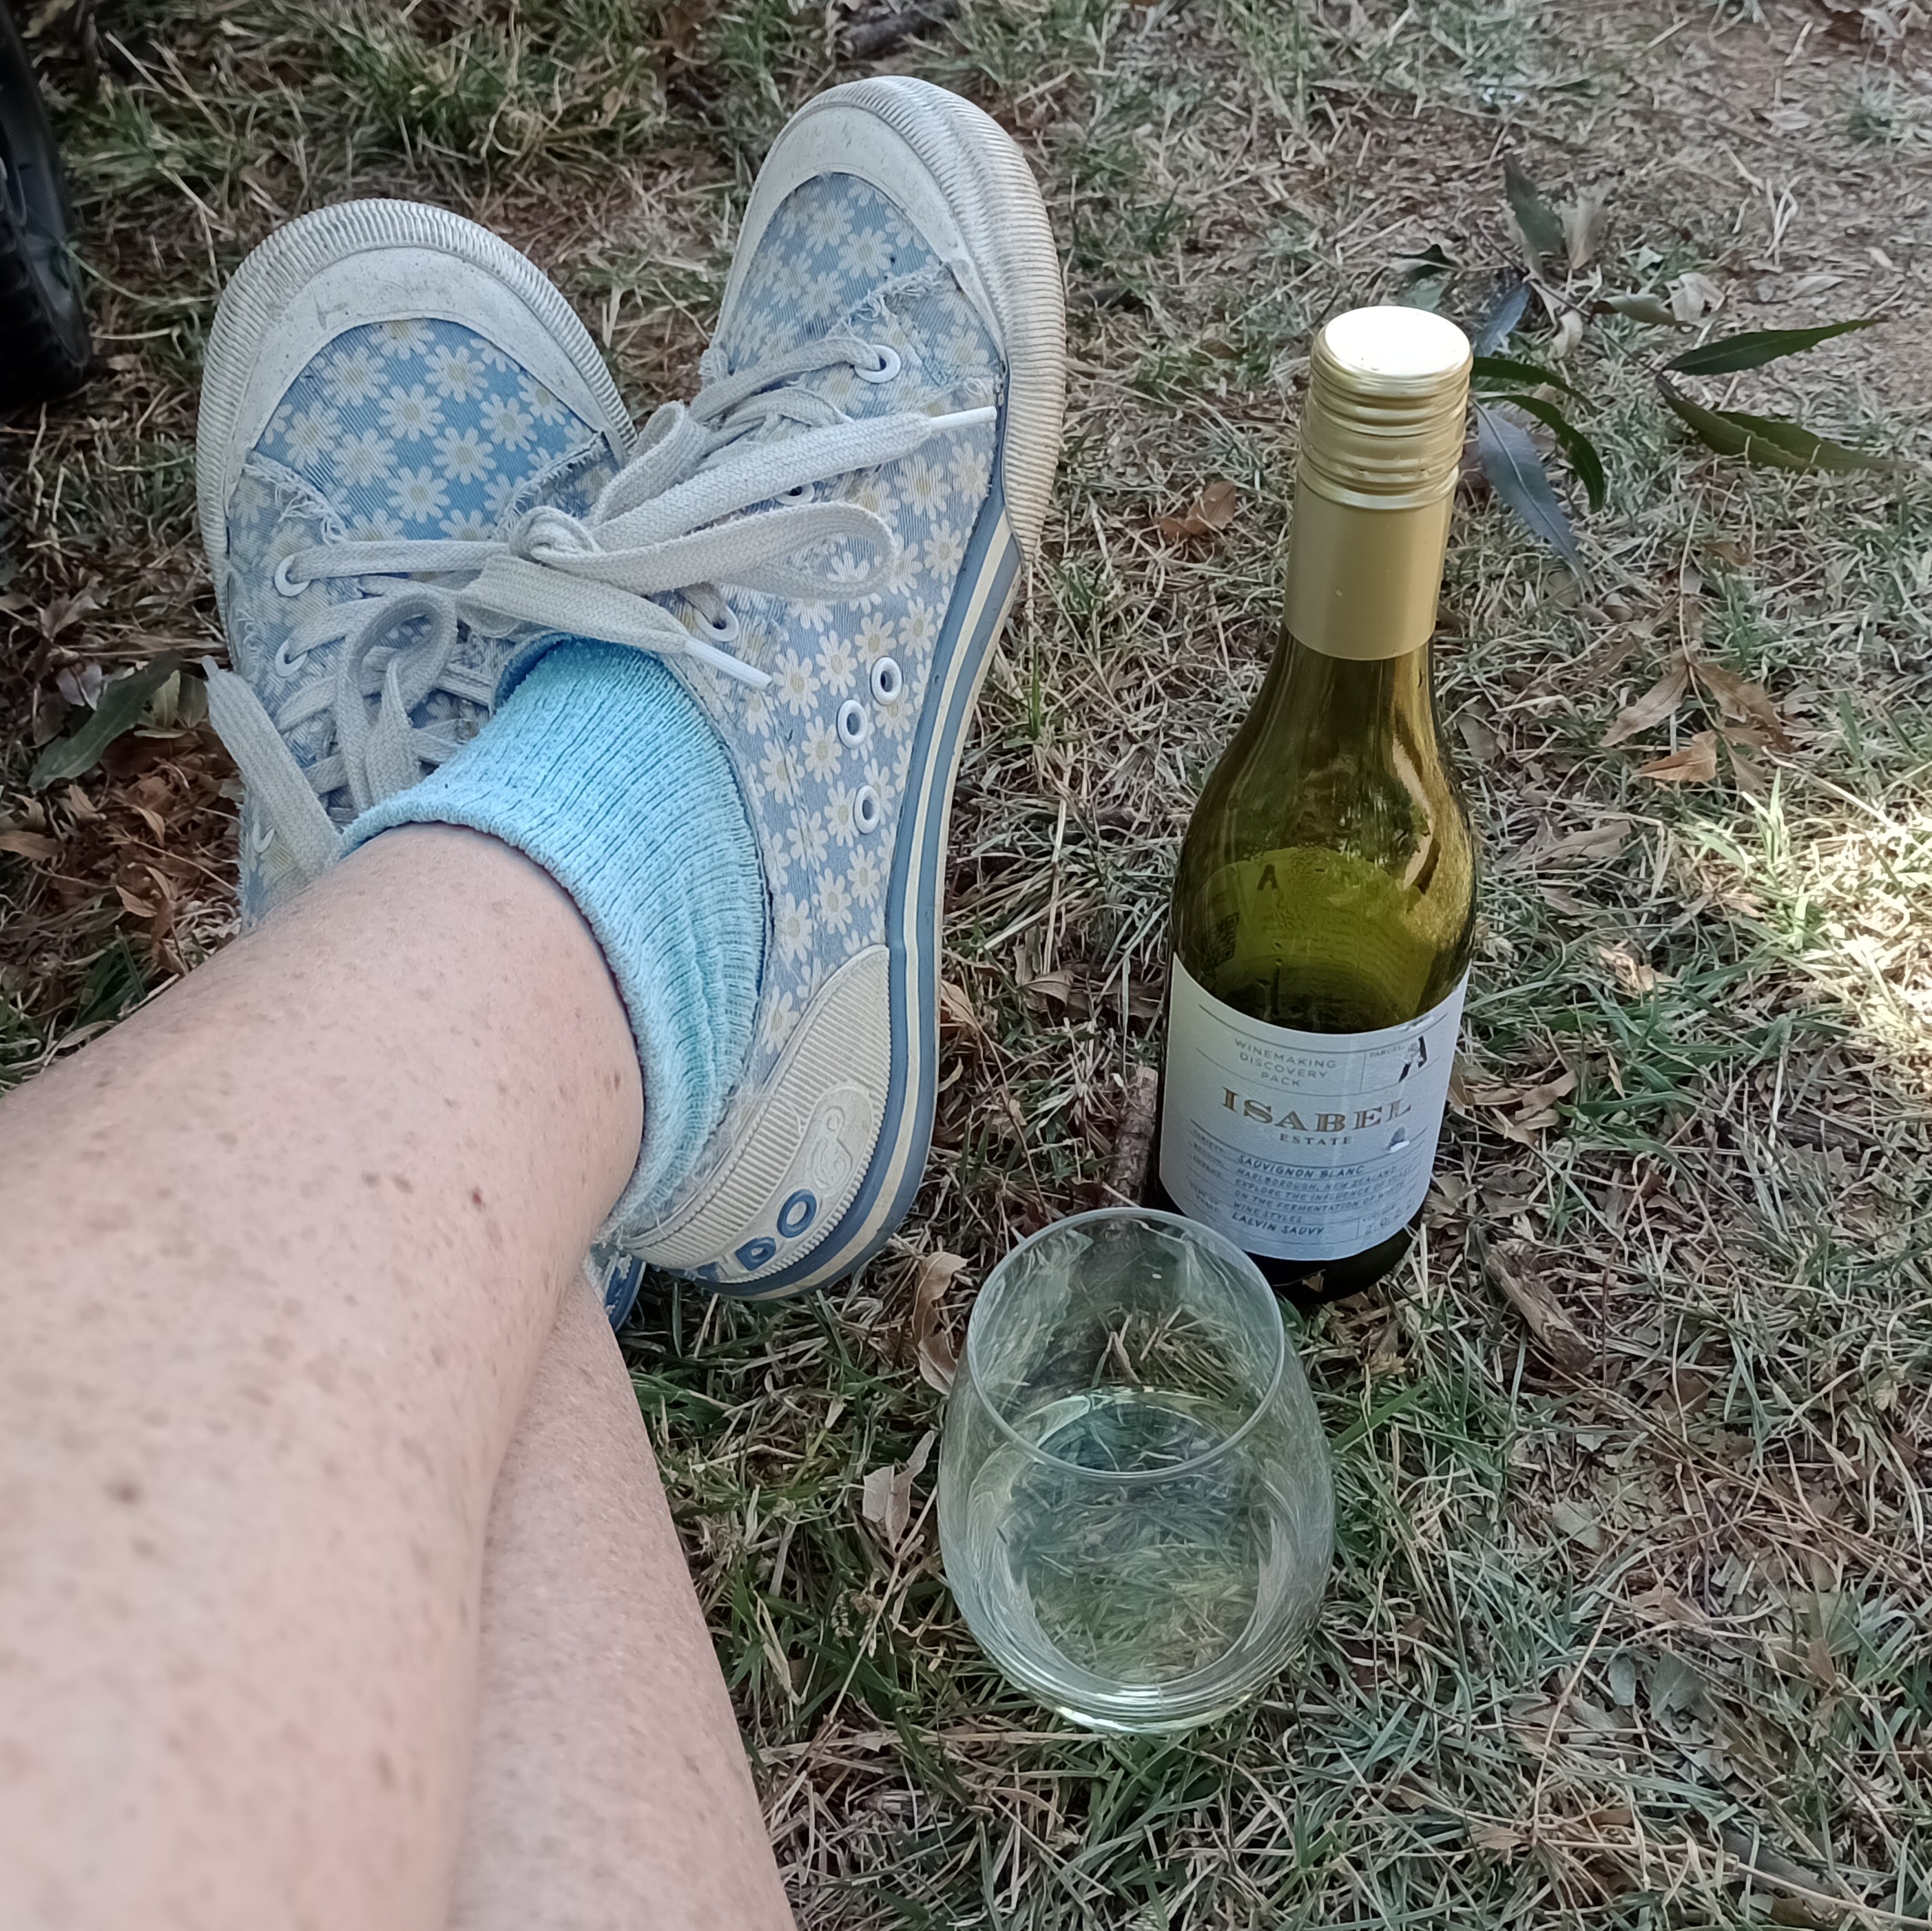 Tiny Pleasures #88: Afternoon Wine